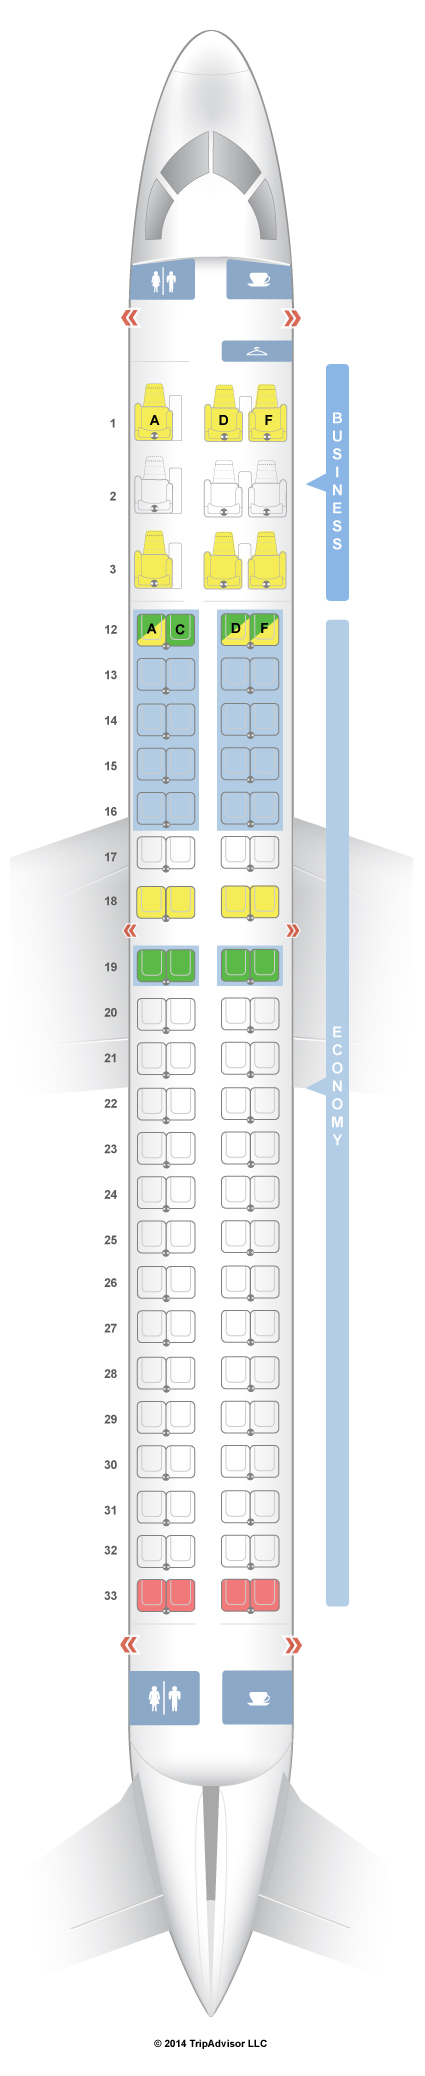 Embraer 175 Air Canada Seating Chart